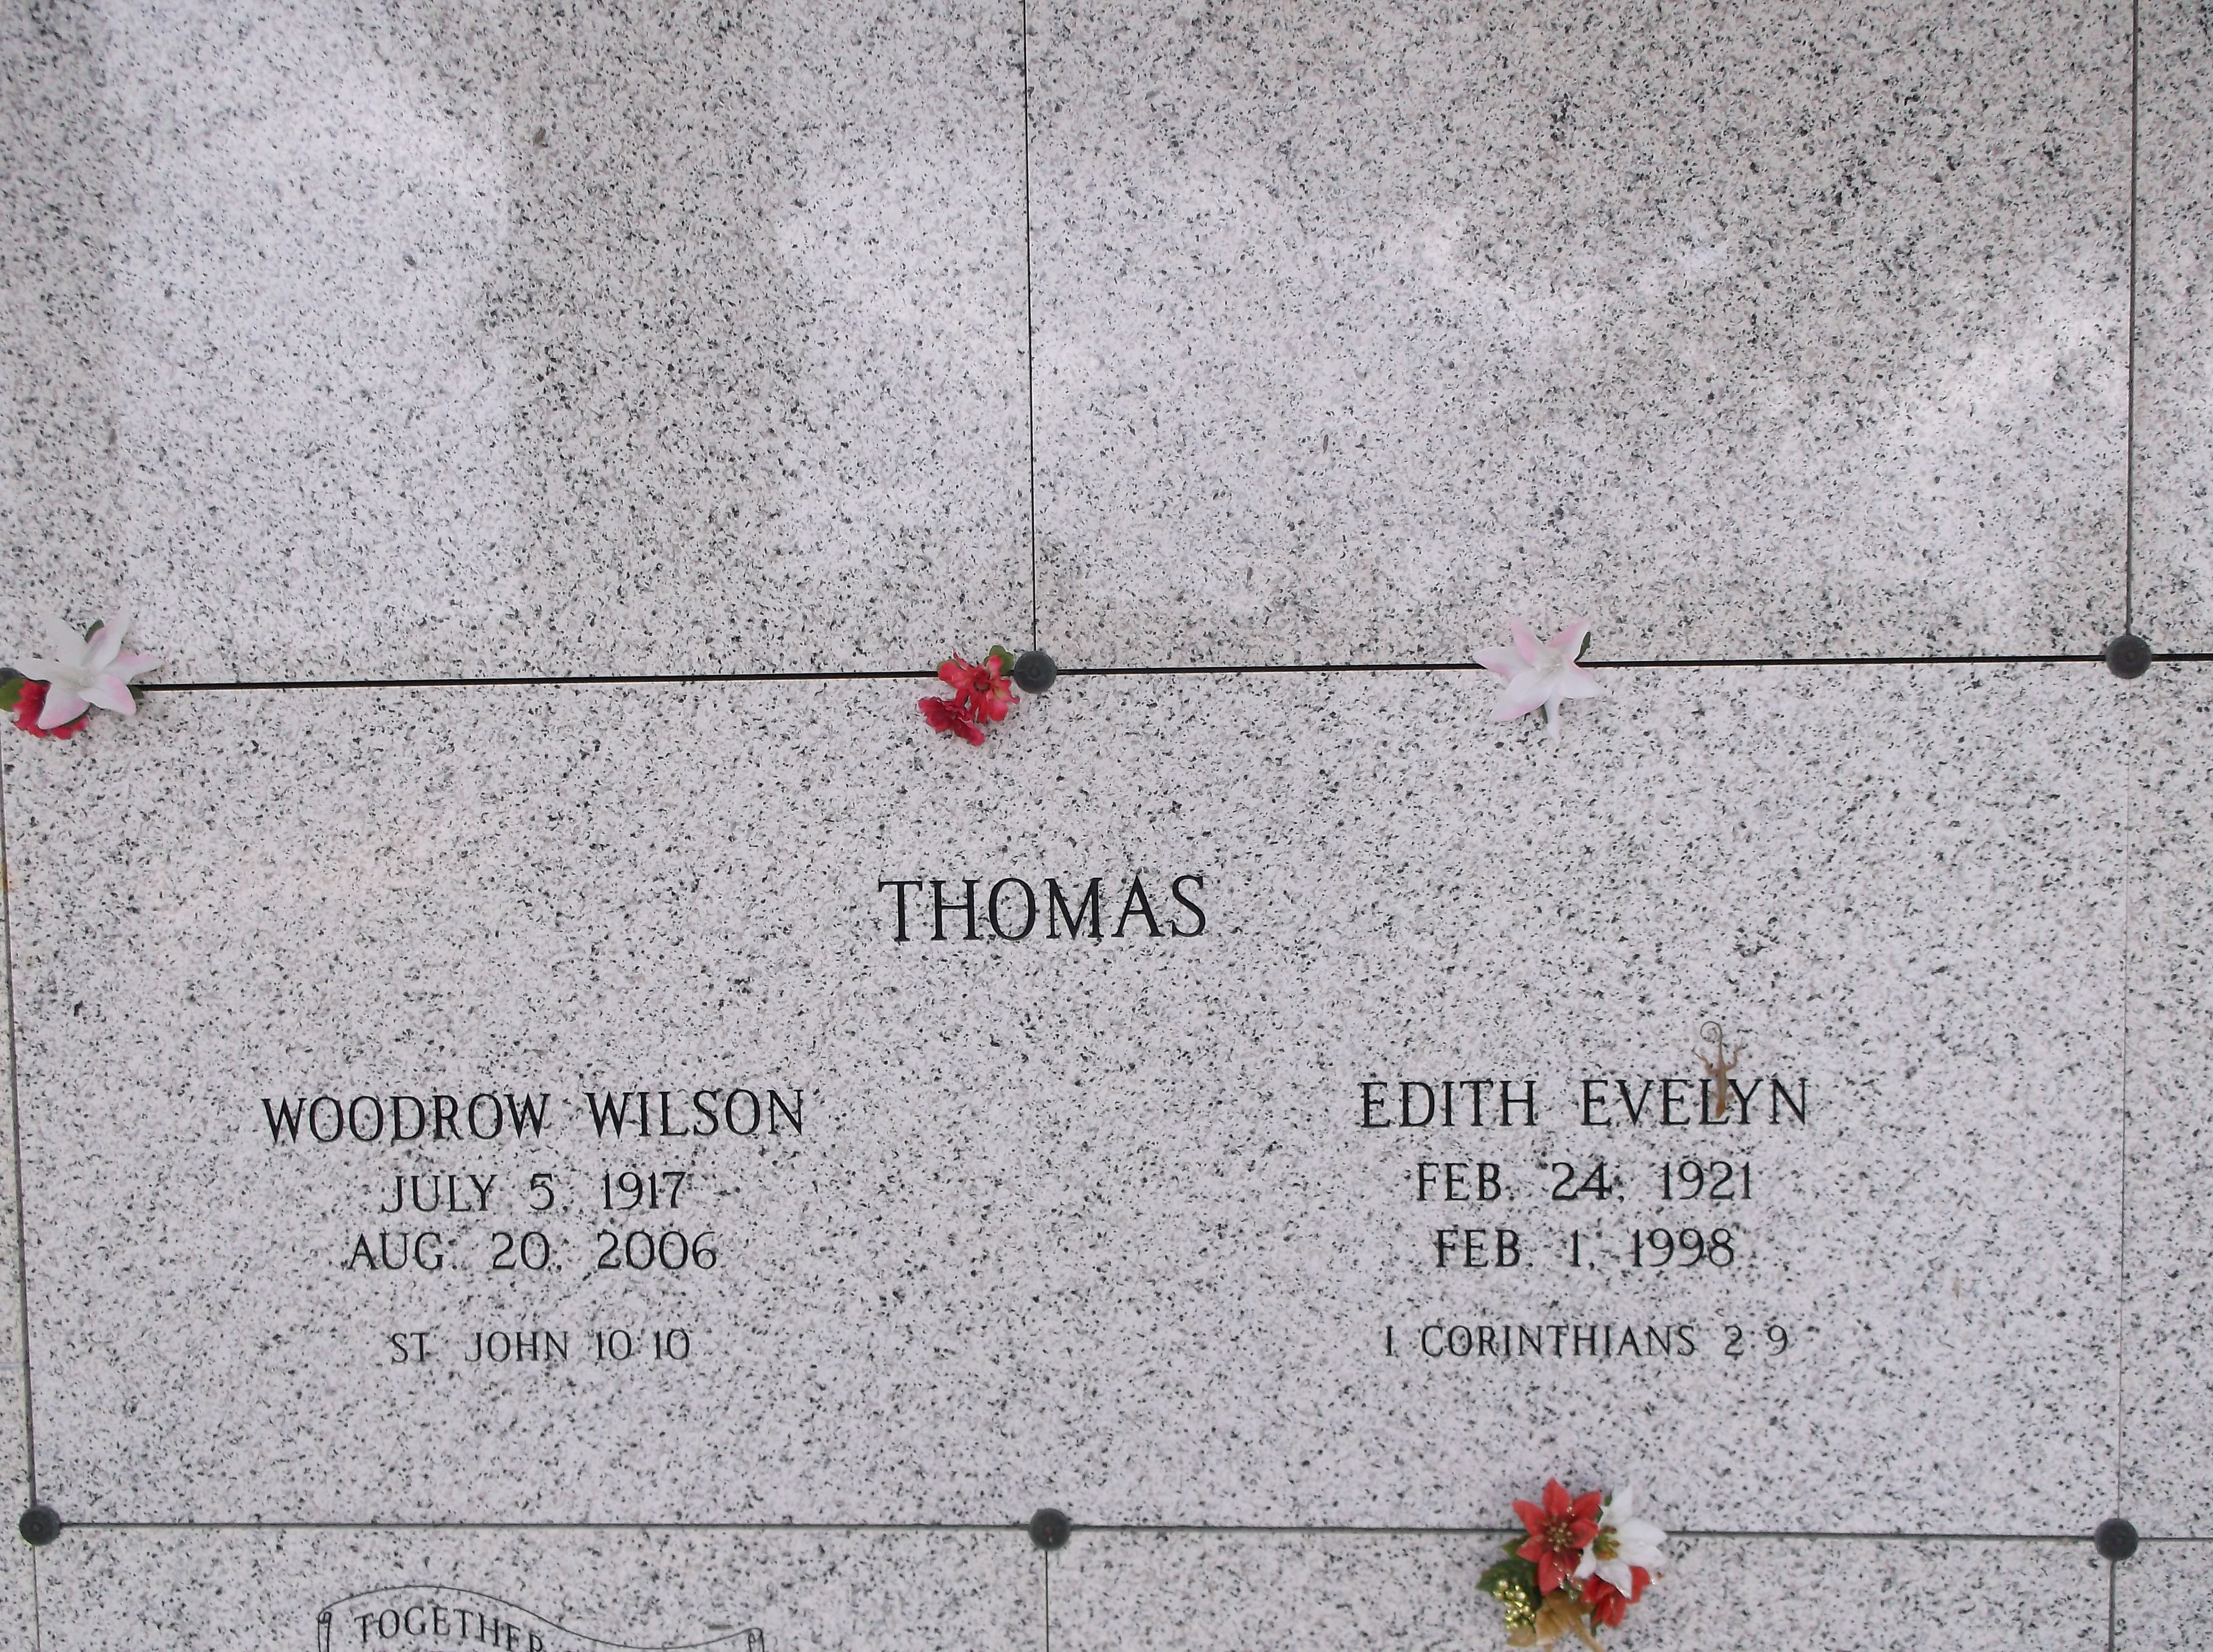 Edith Evelyn Thomas